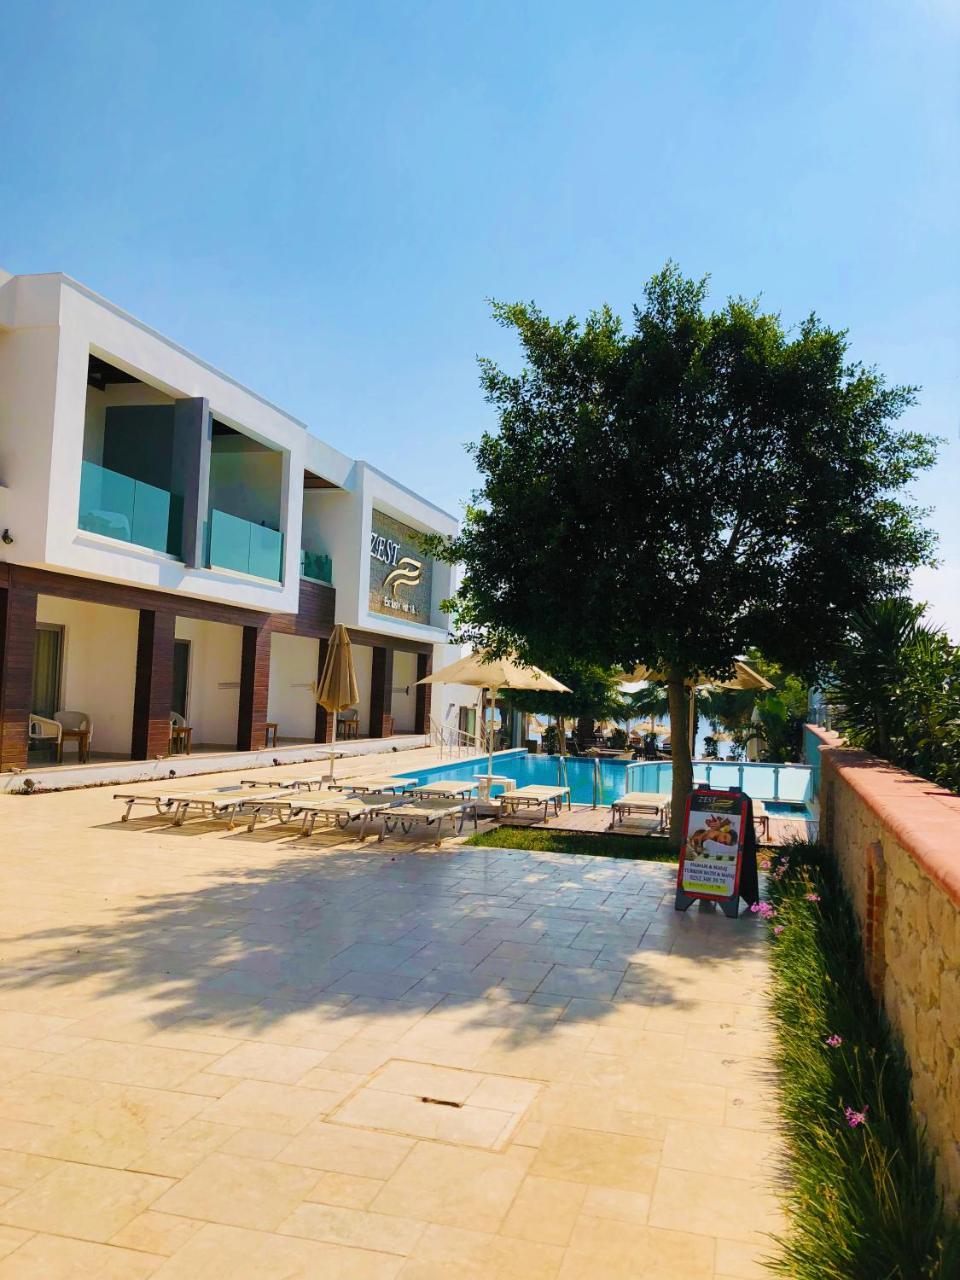 Zest Exclusive Hotel & Spa Ortakent Exterior photo